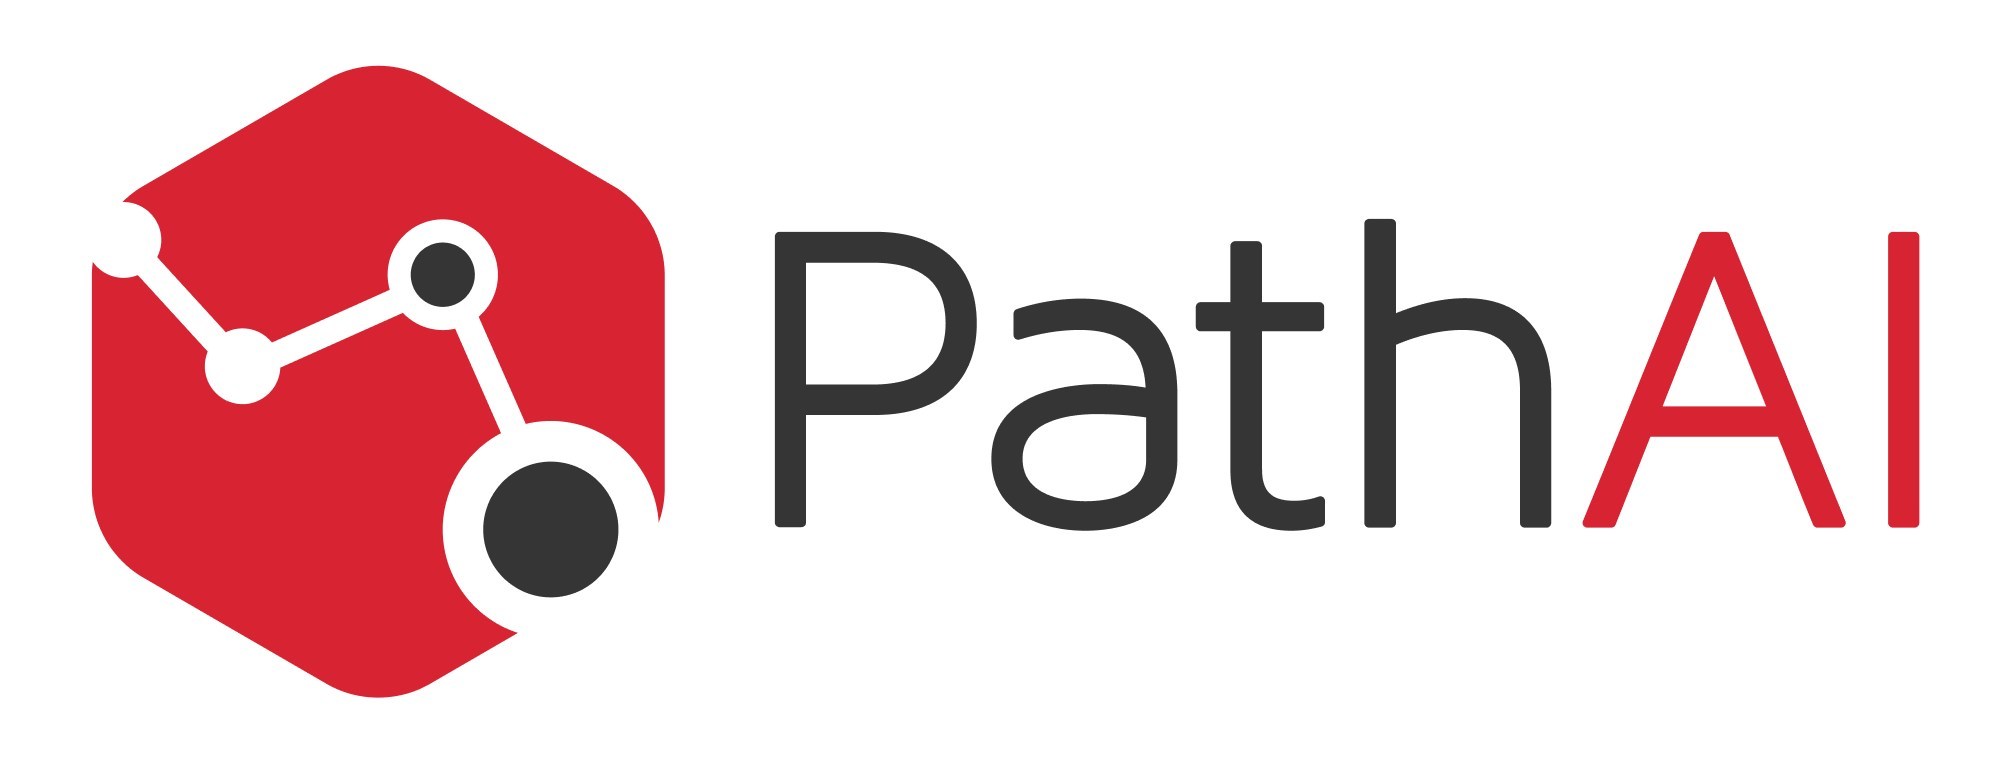 PathAI Announces Early Adoption of its Digital Pathology Platform and Algorithms by Leading Anatomic Pathology Laboratories